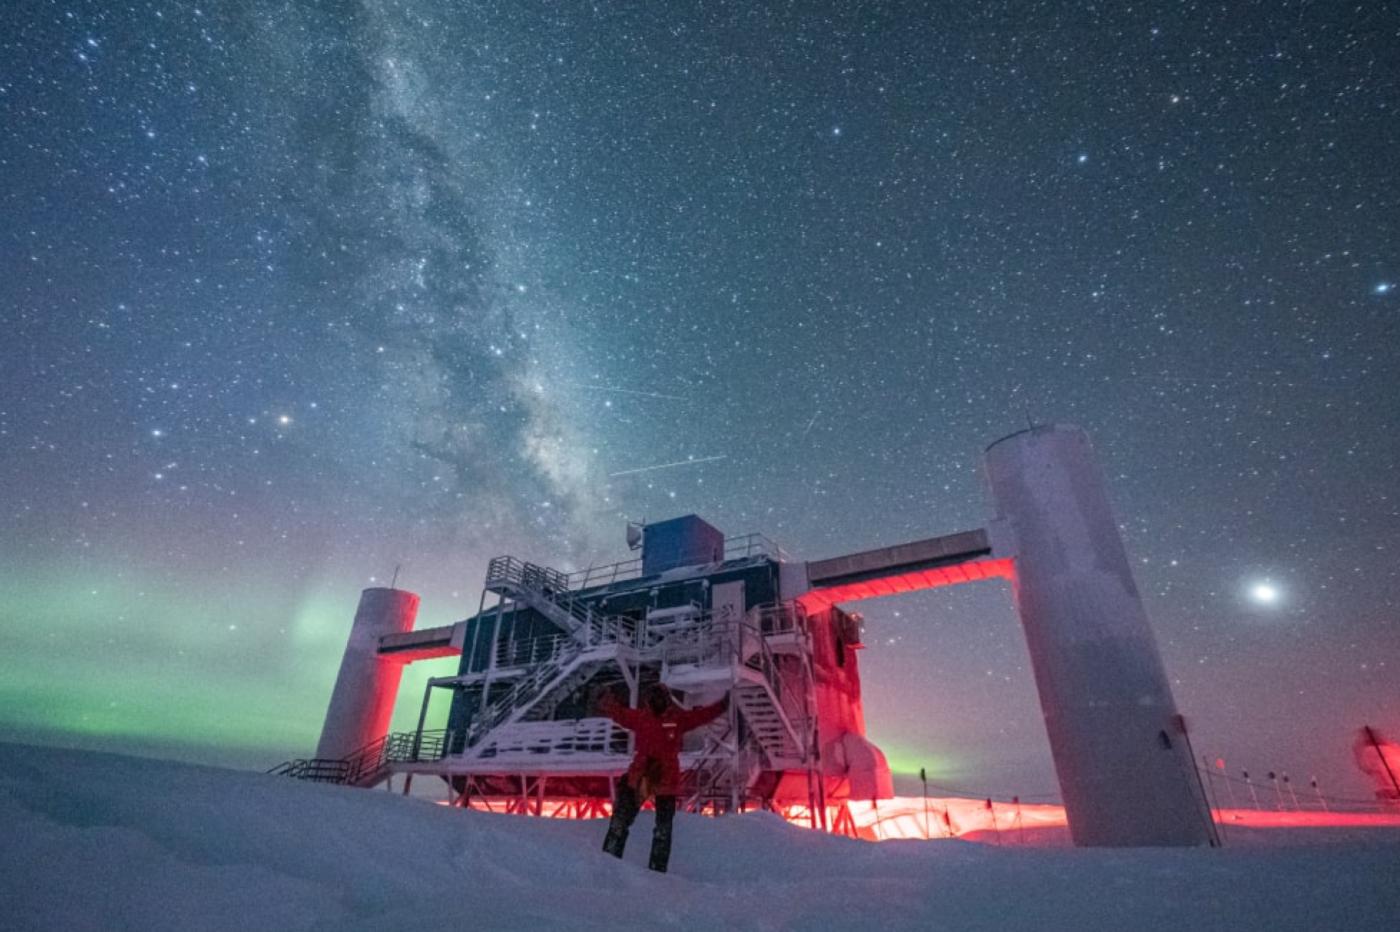 l'IceCube Neutrino Observatory en Antarctique